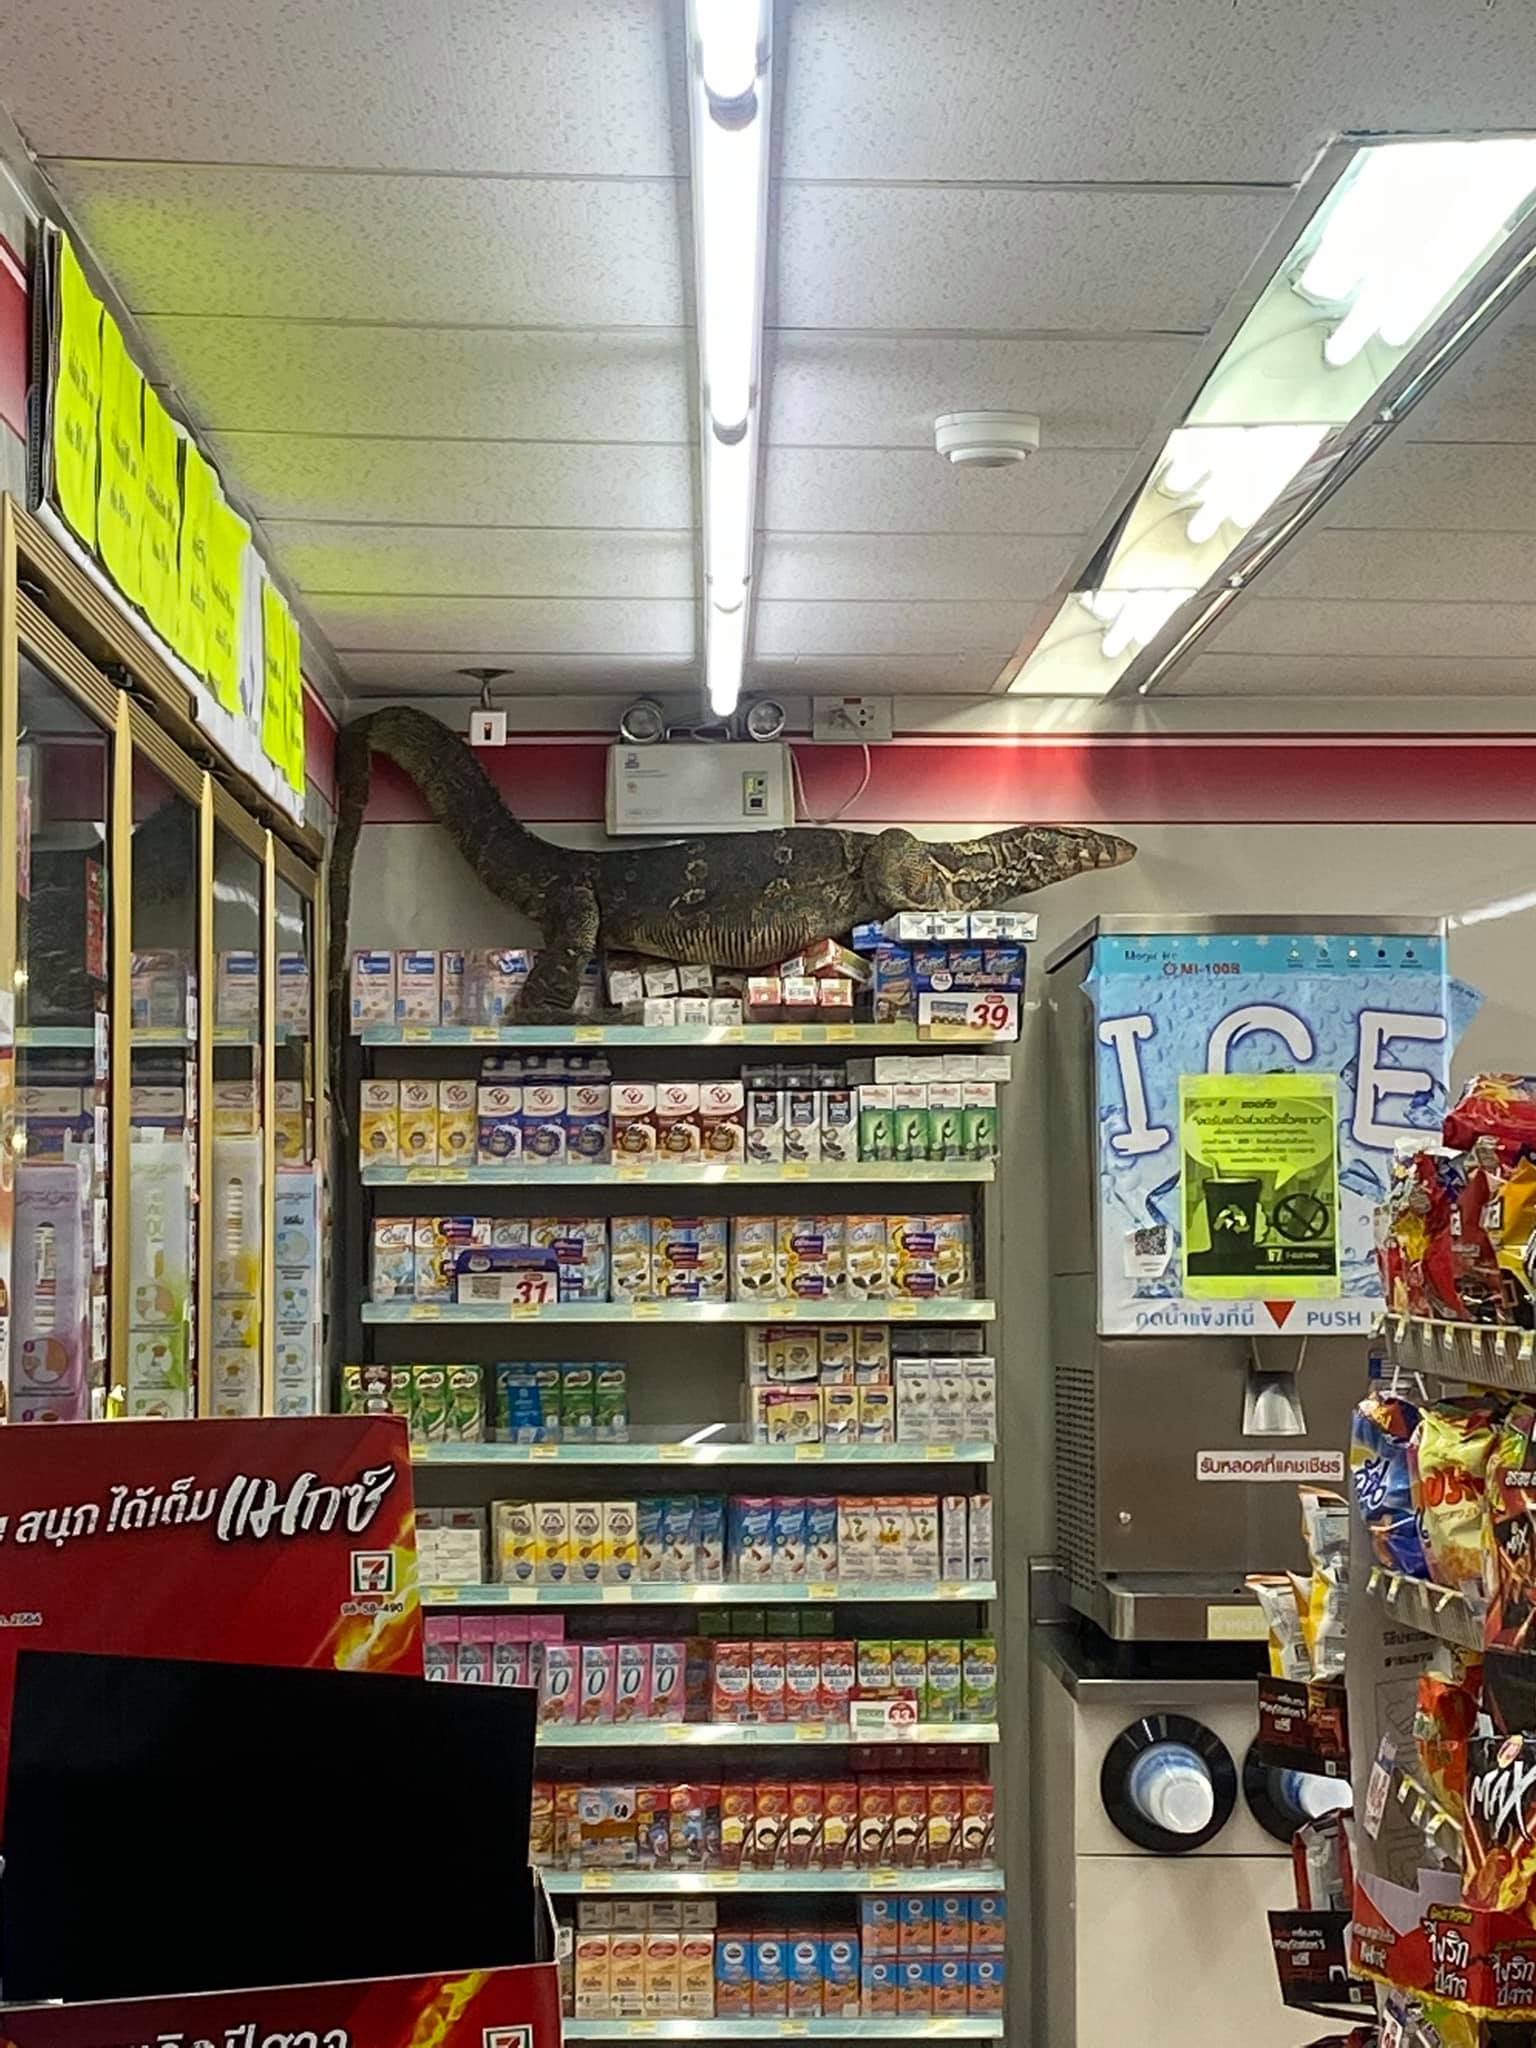 lizard on shelves